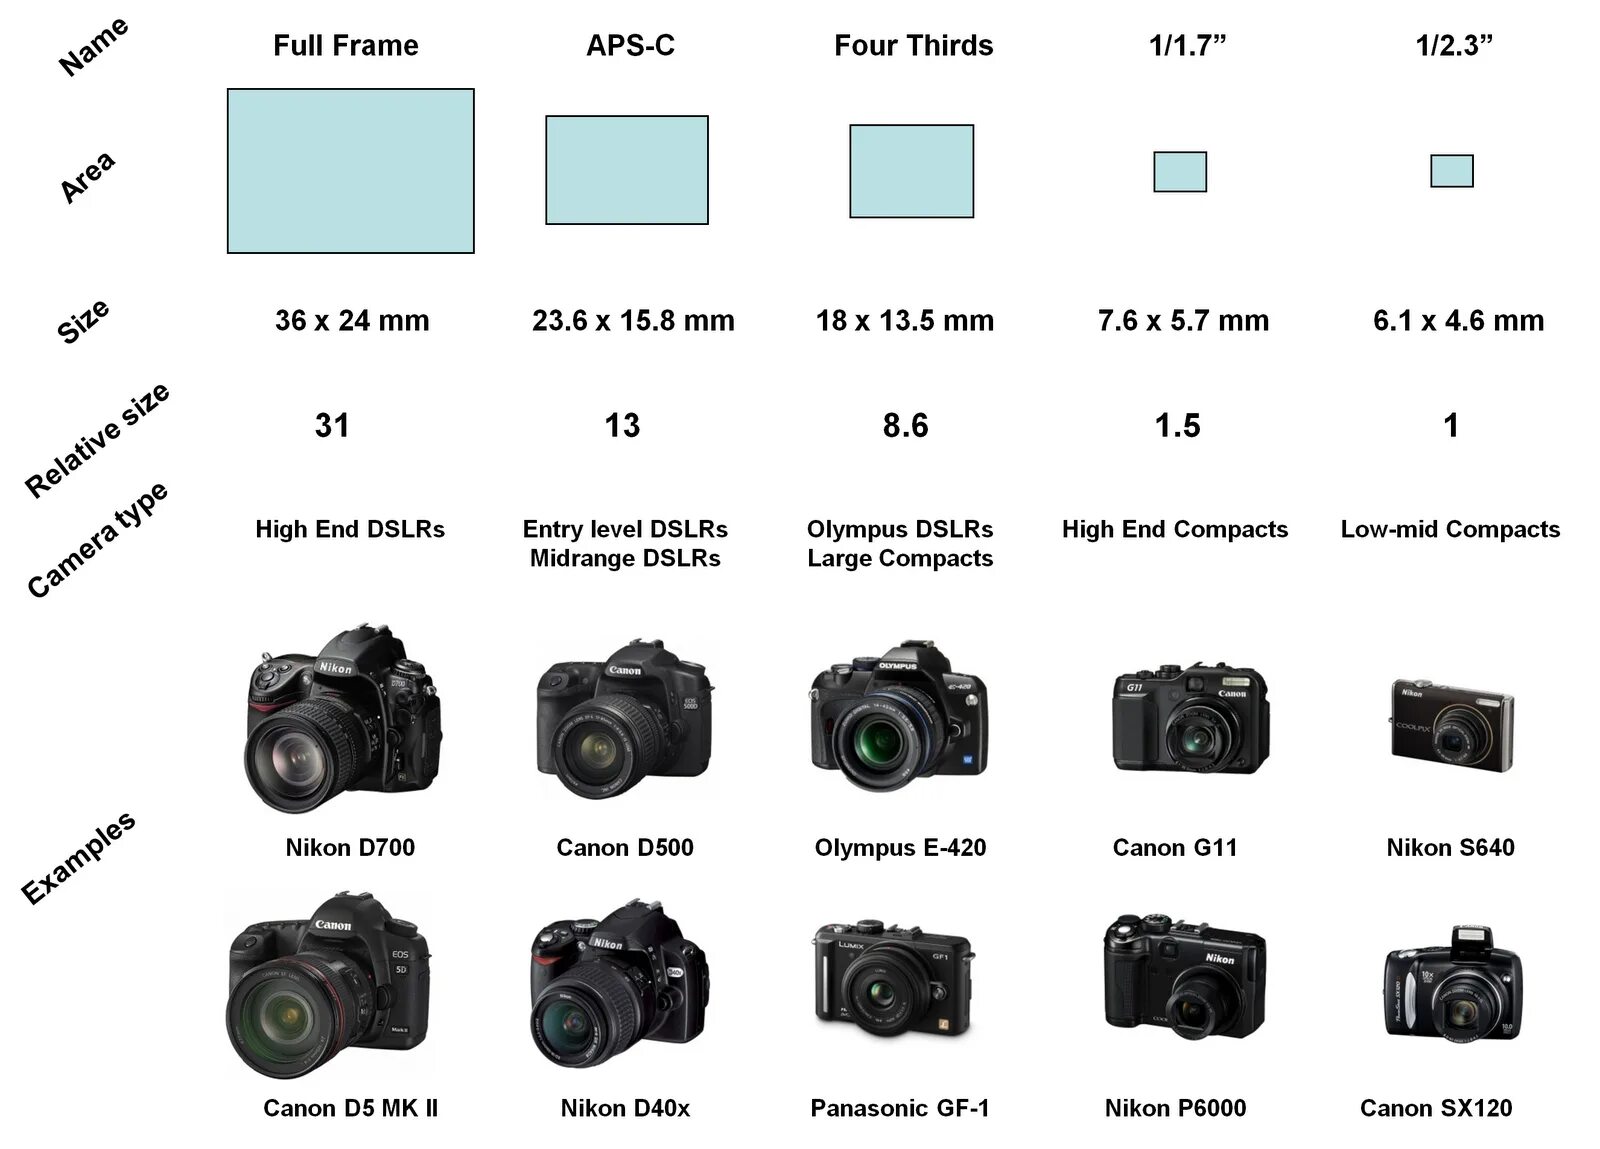 Сравнение размеров матриц фотоаппаратов. Nikon 14-24 2.8 диаметр объектива. Canon размер матрицы. Размеры матриц фотоаппаратов Canon. Разрешение камер смартфонов